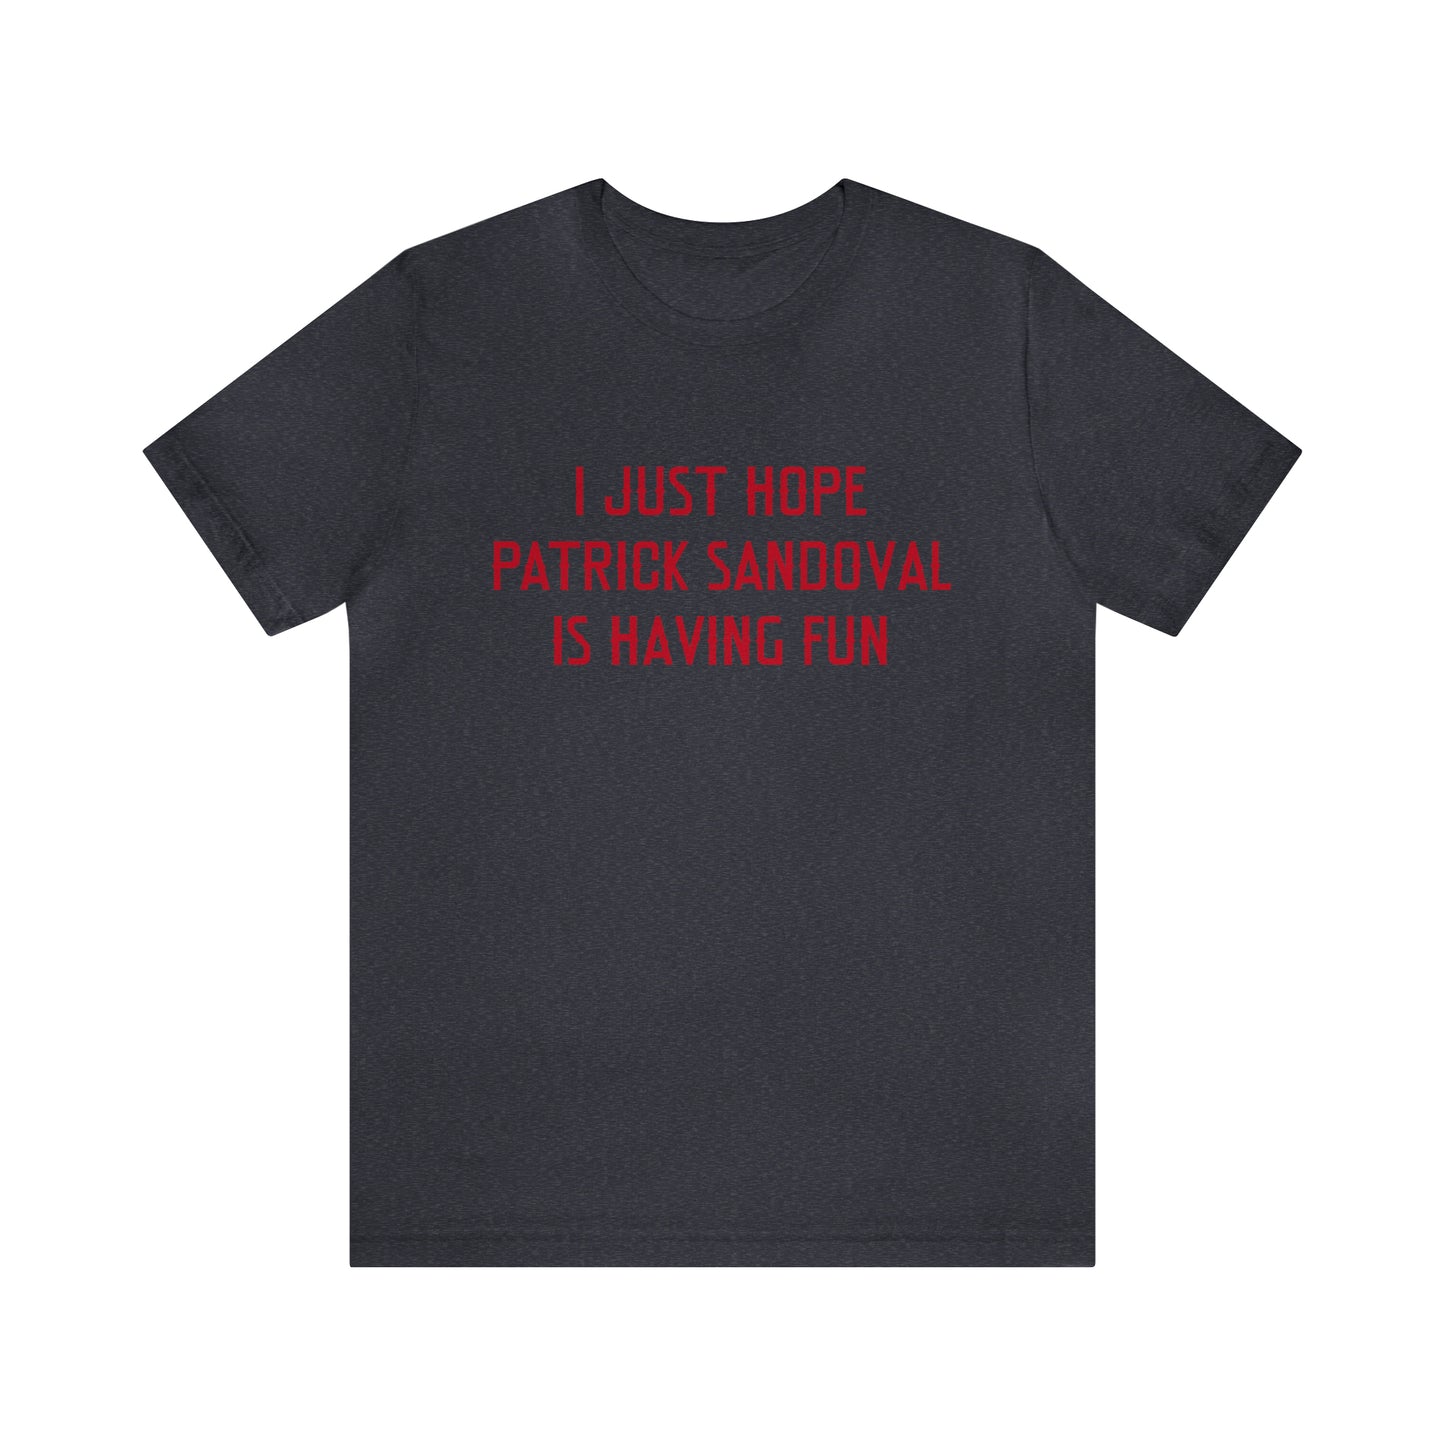 Patrick Sandoval Having Fun - Unisex T-shirt